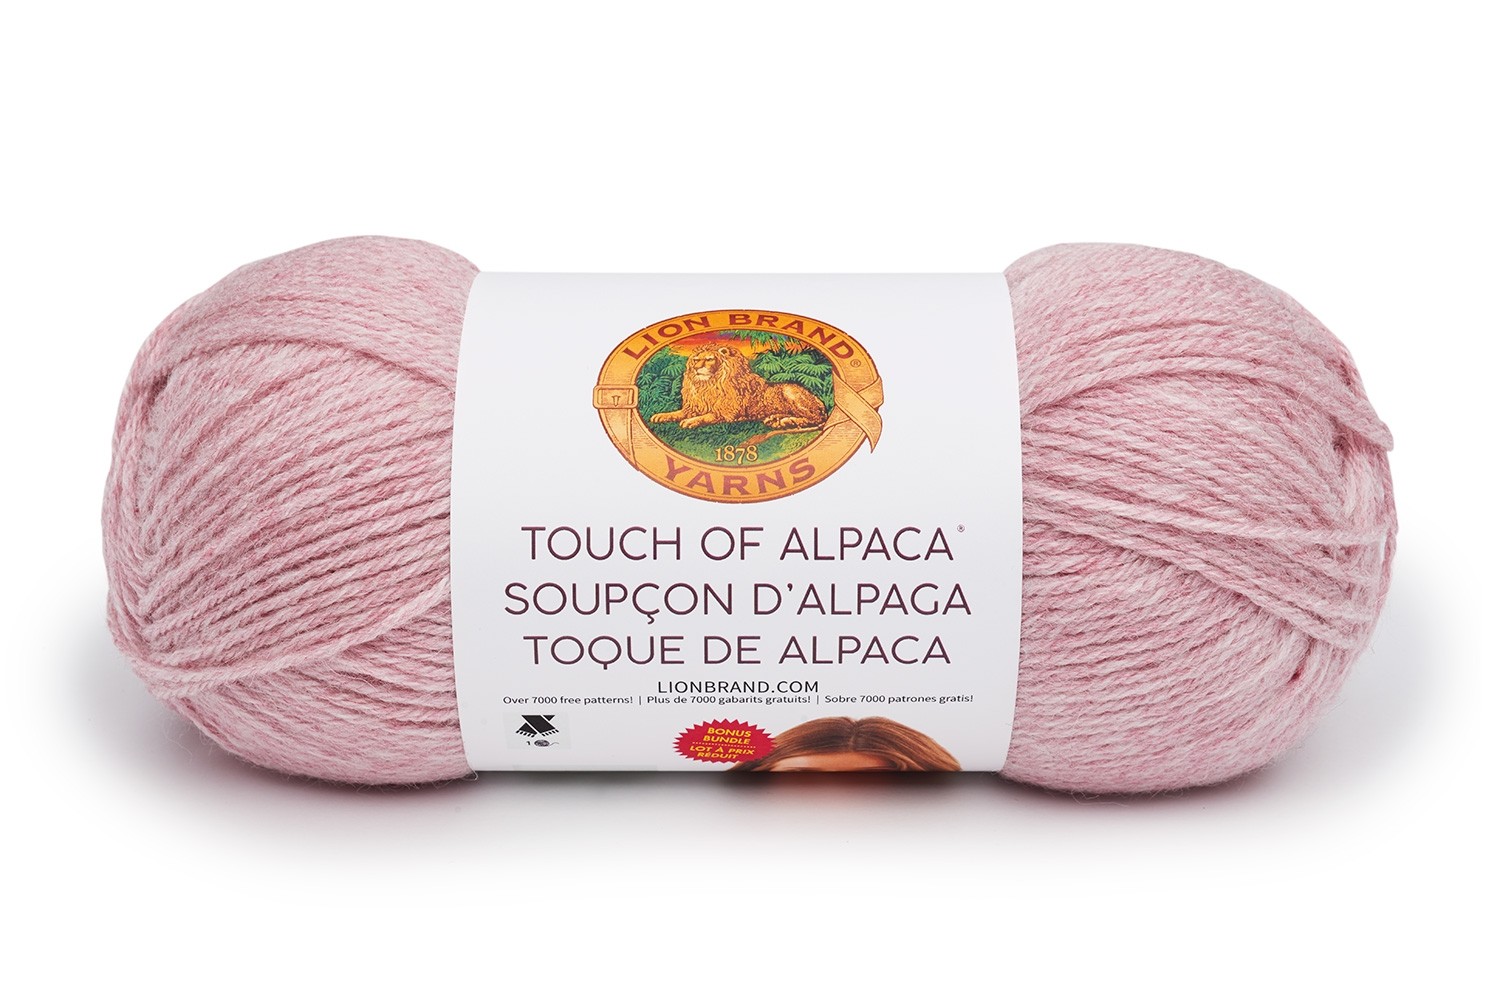 Touch of Alpaca: Now in Bonus Bundles! + 4 Free Patterns